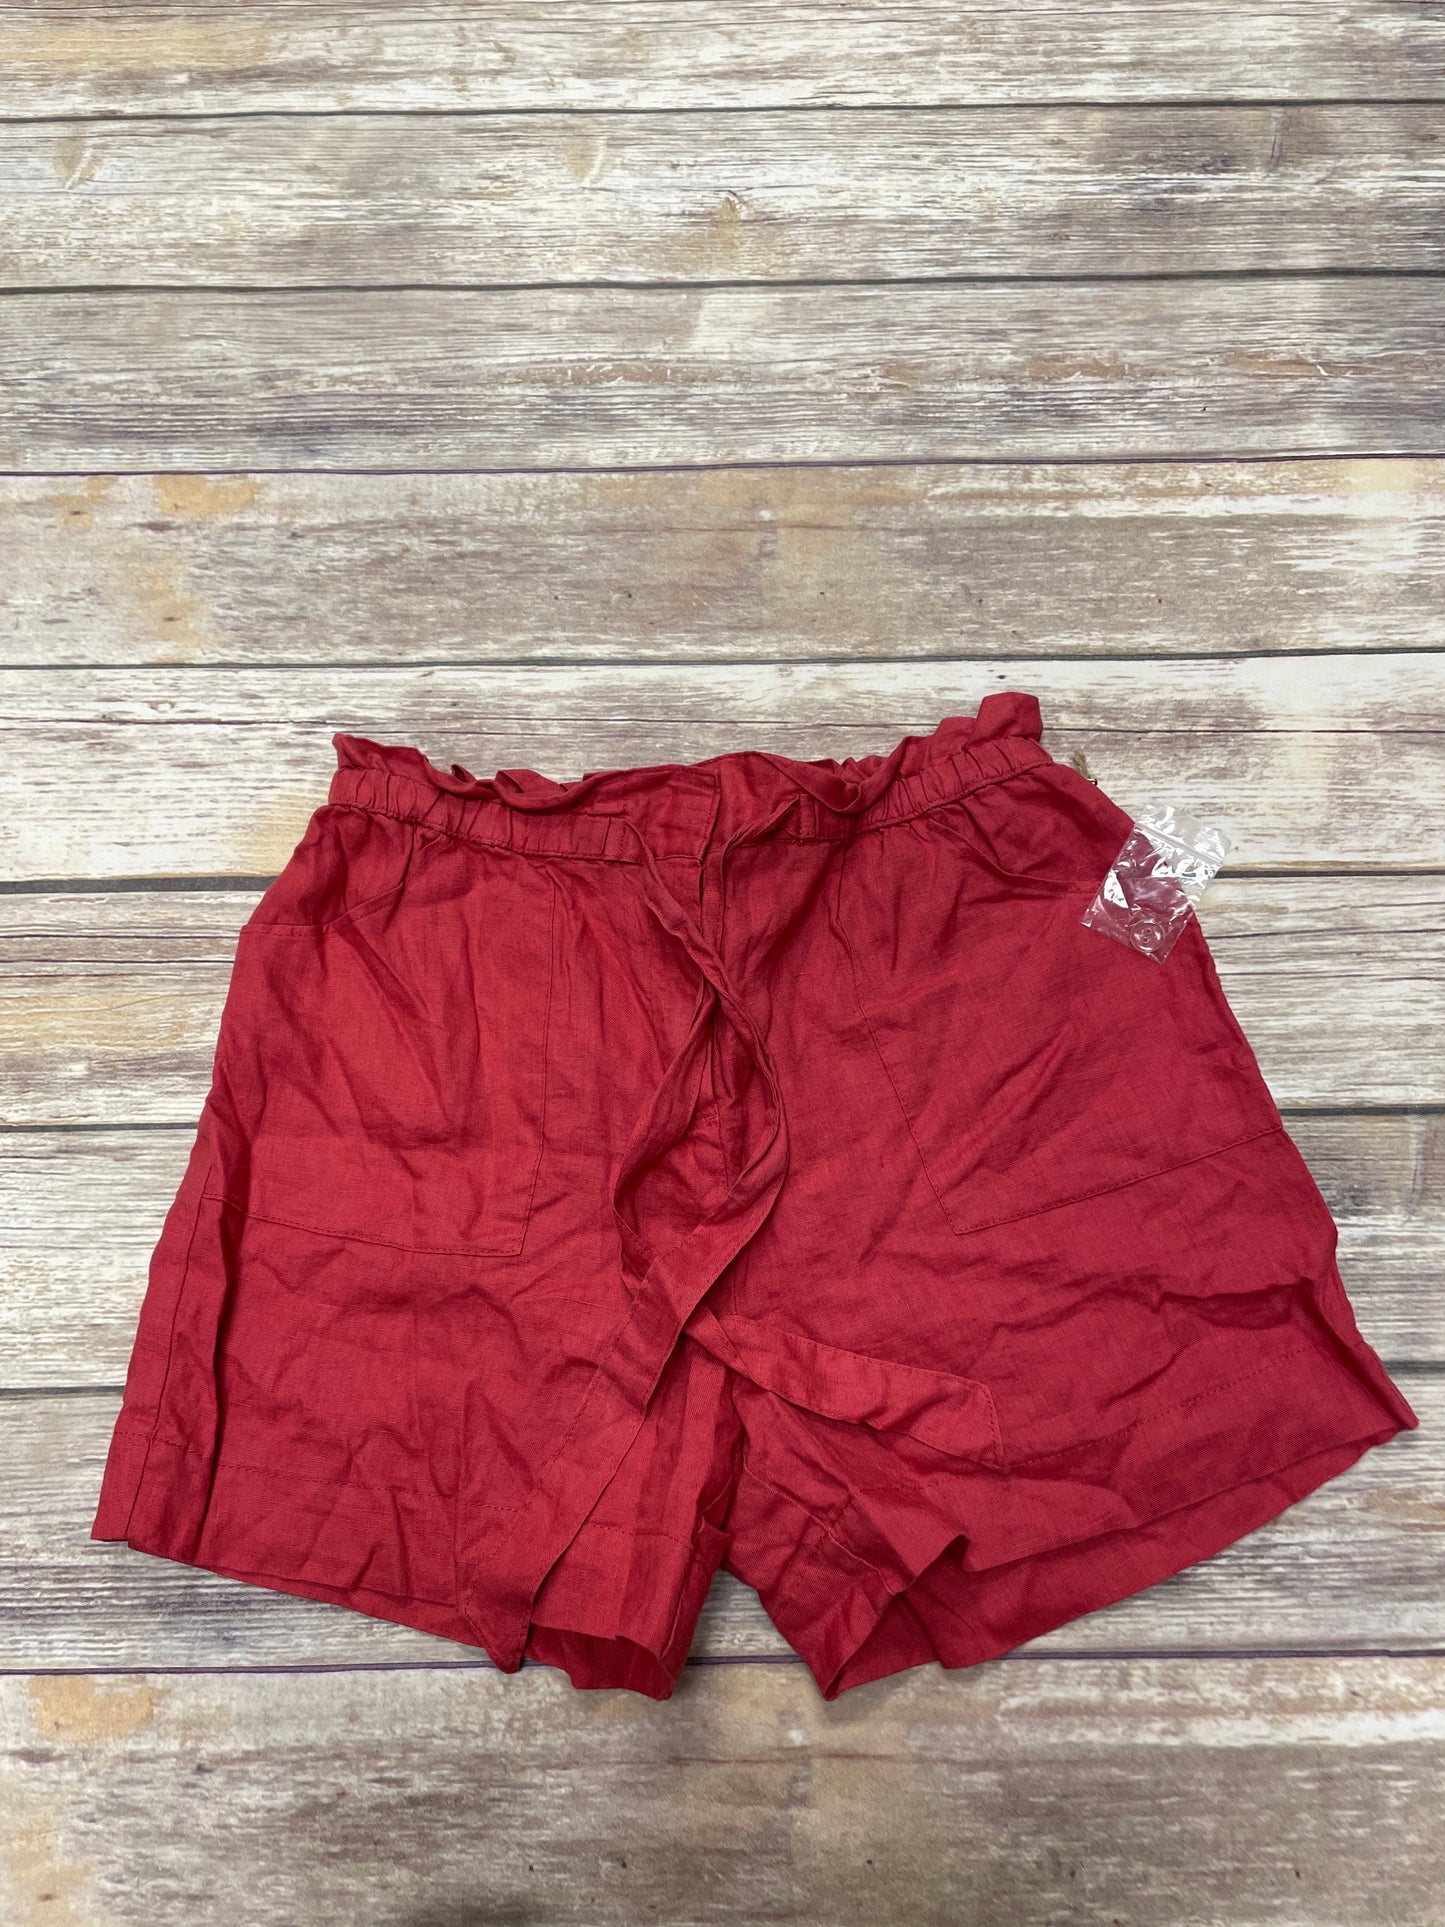 Red Shorts Kenar, Size 6